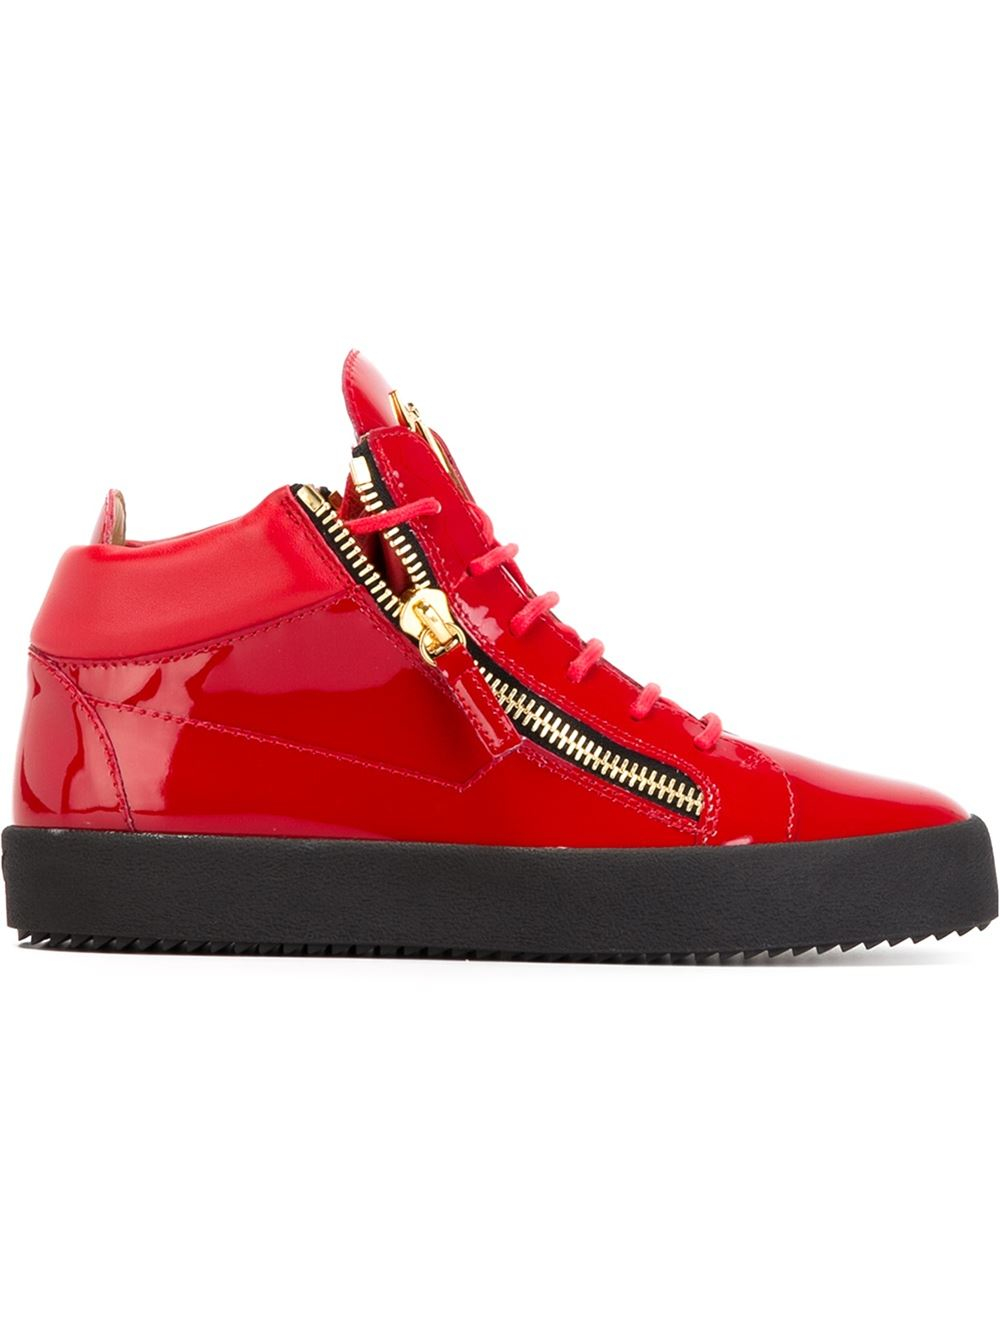 Giuseppe Zanotti Leather 'vegas' Hi-top Sneakers in Red for Men - Lyst